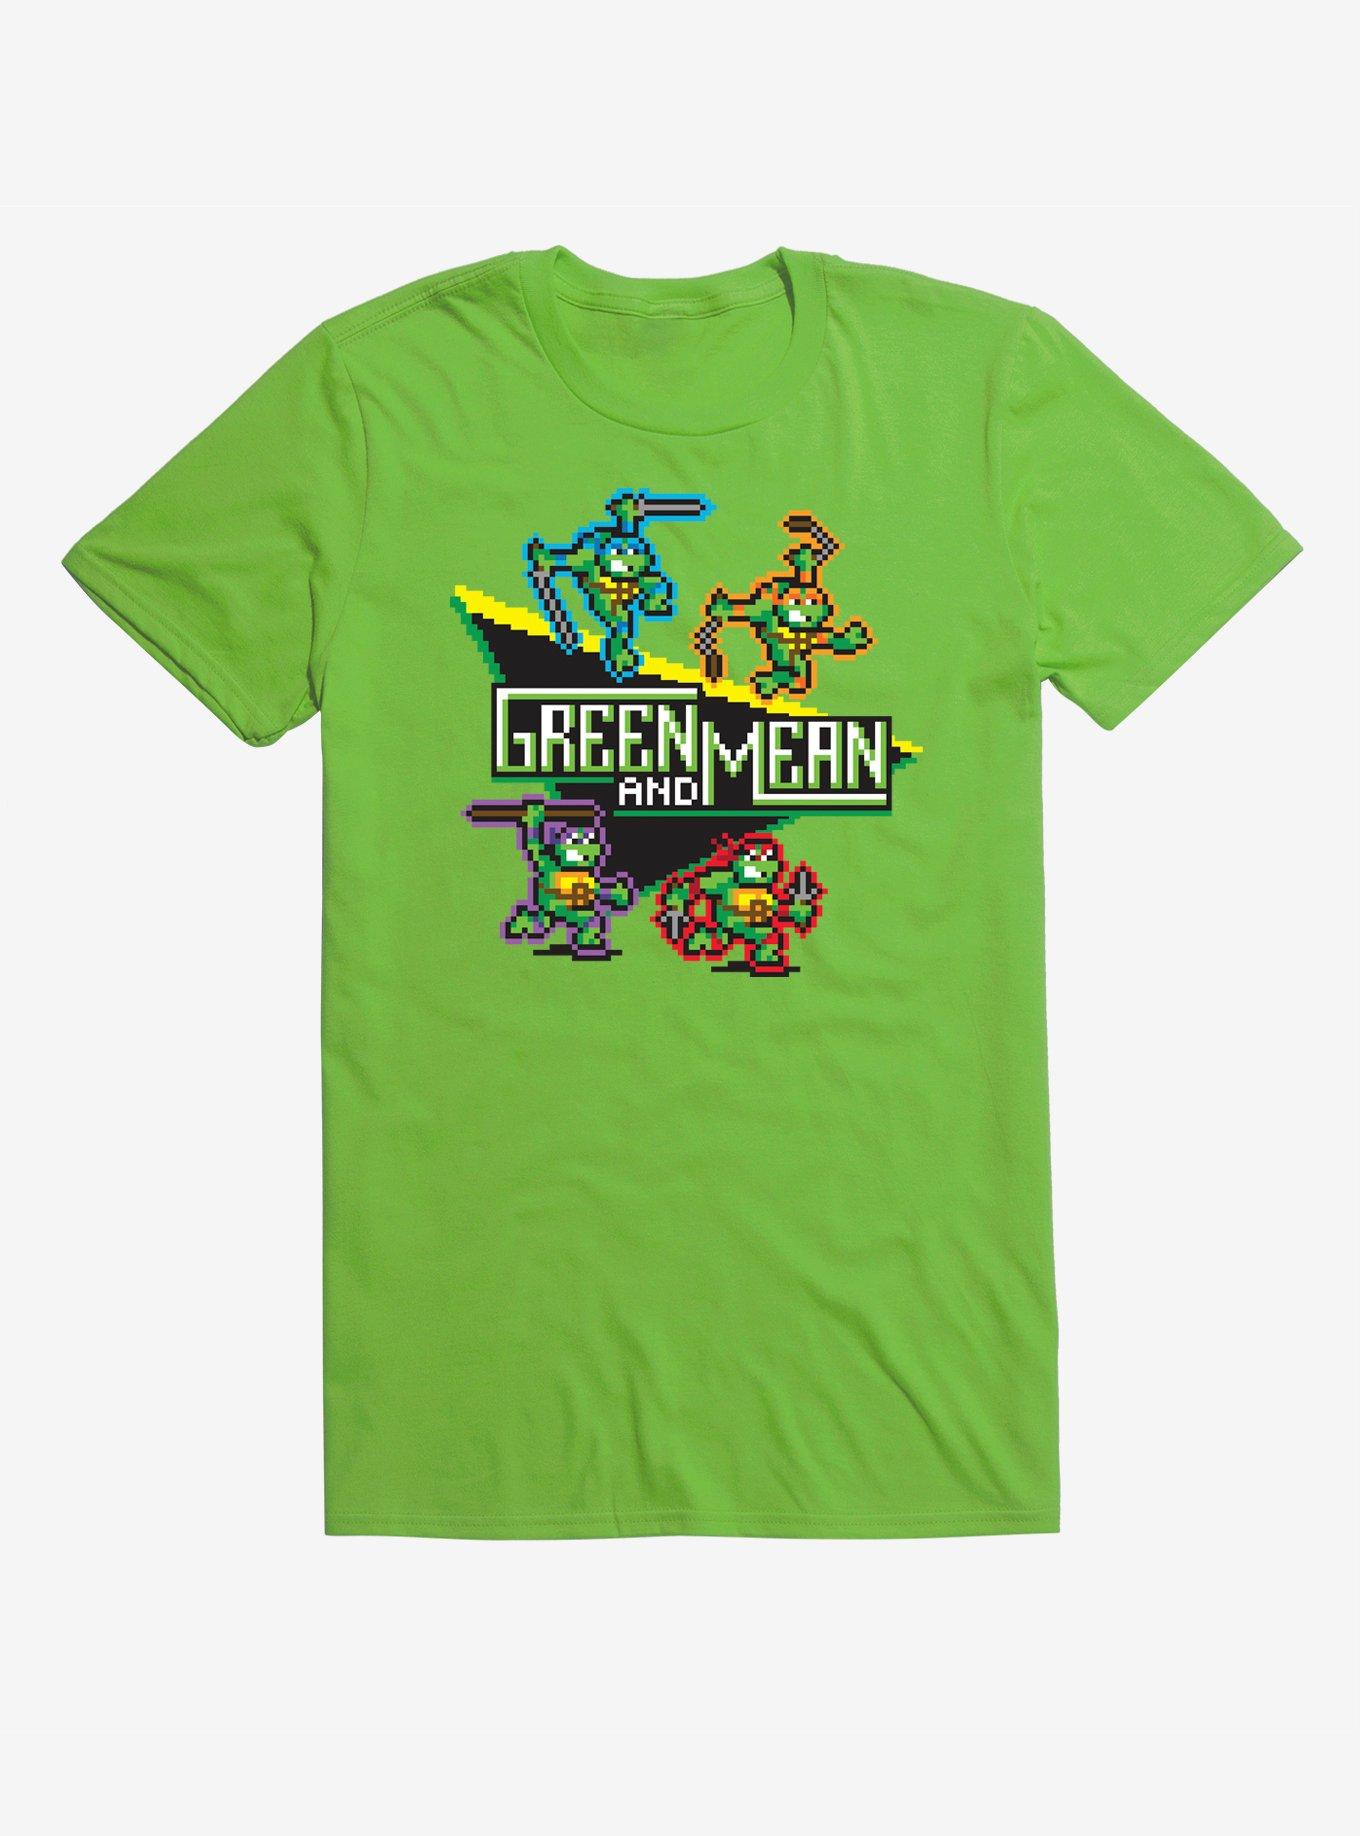 Teenage Mutant Ninja Turtles Pixel Art Green and Mean T-Shirt